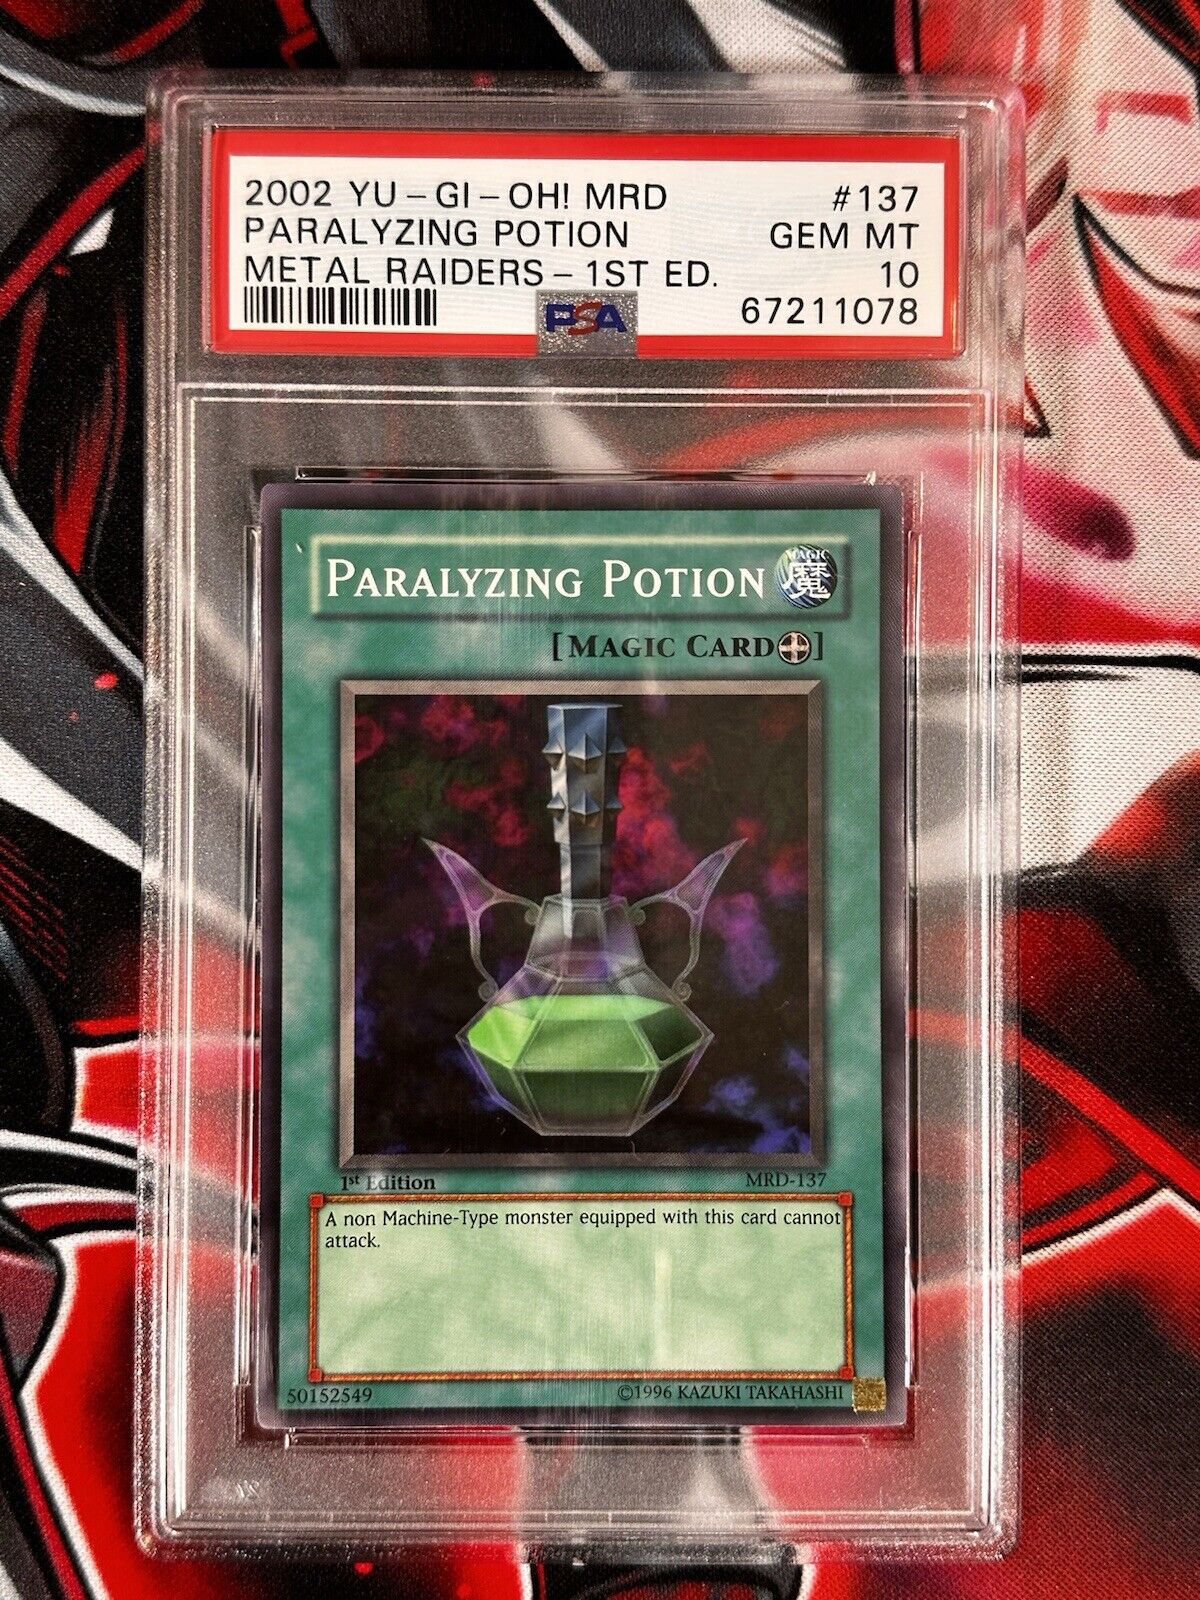 2002 Yu-Gi-Oh MRD Metal Raiders 1st Edition #137 Paralyzing Potion PSA 10